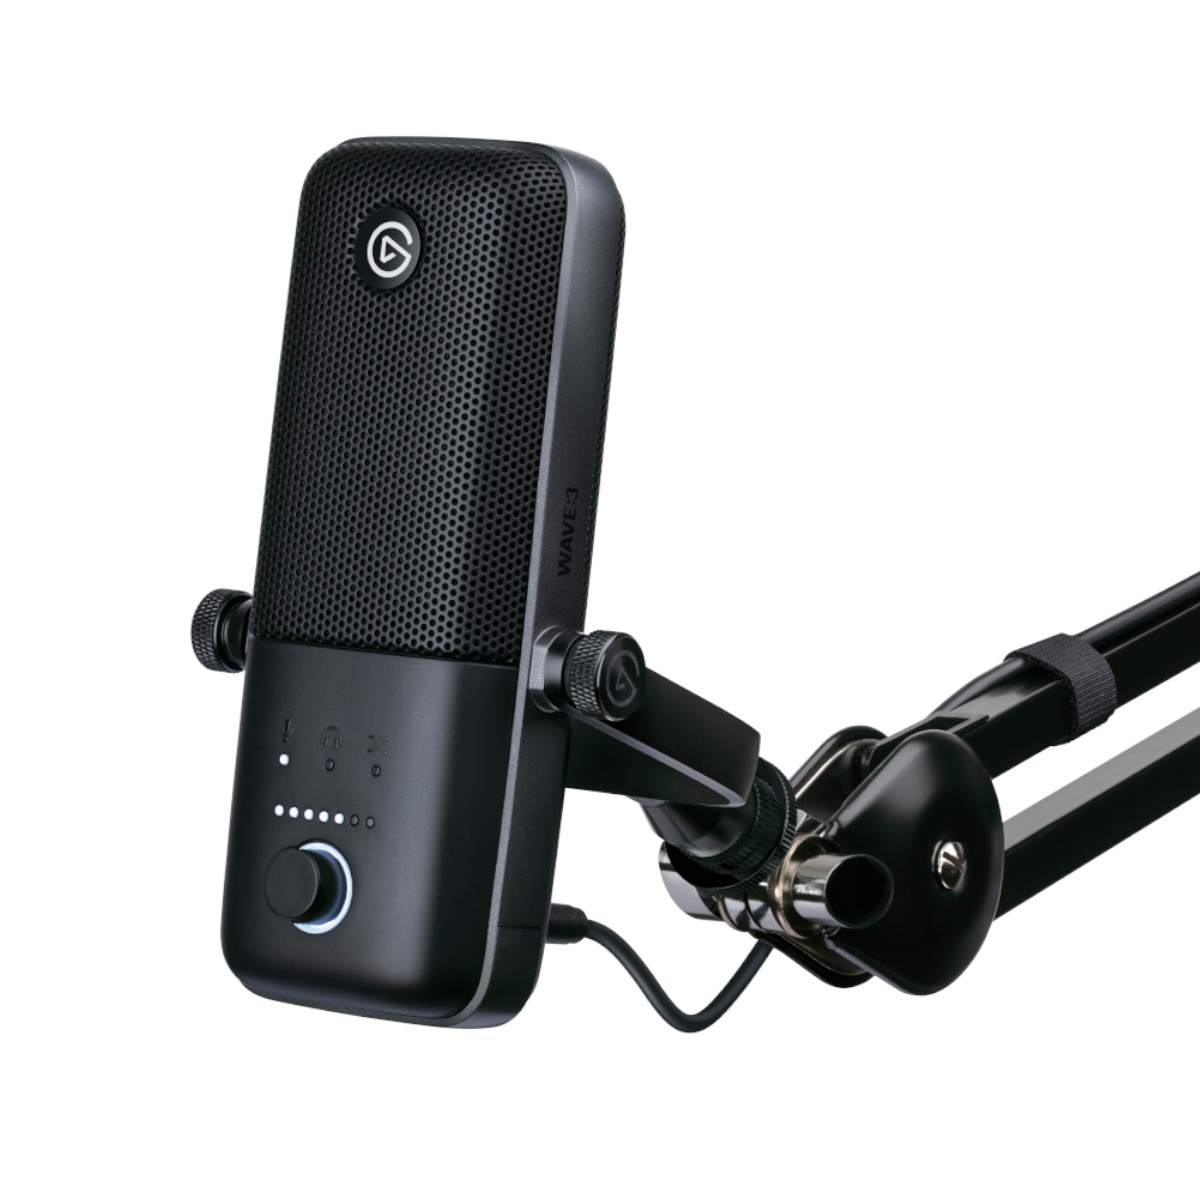 Elgato Wave:3 Premium Microphone & Digital Mixing Solution